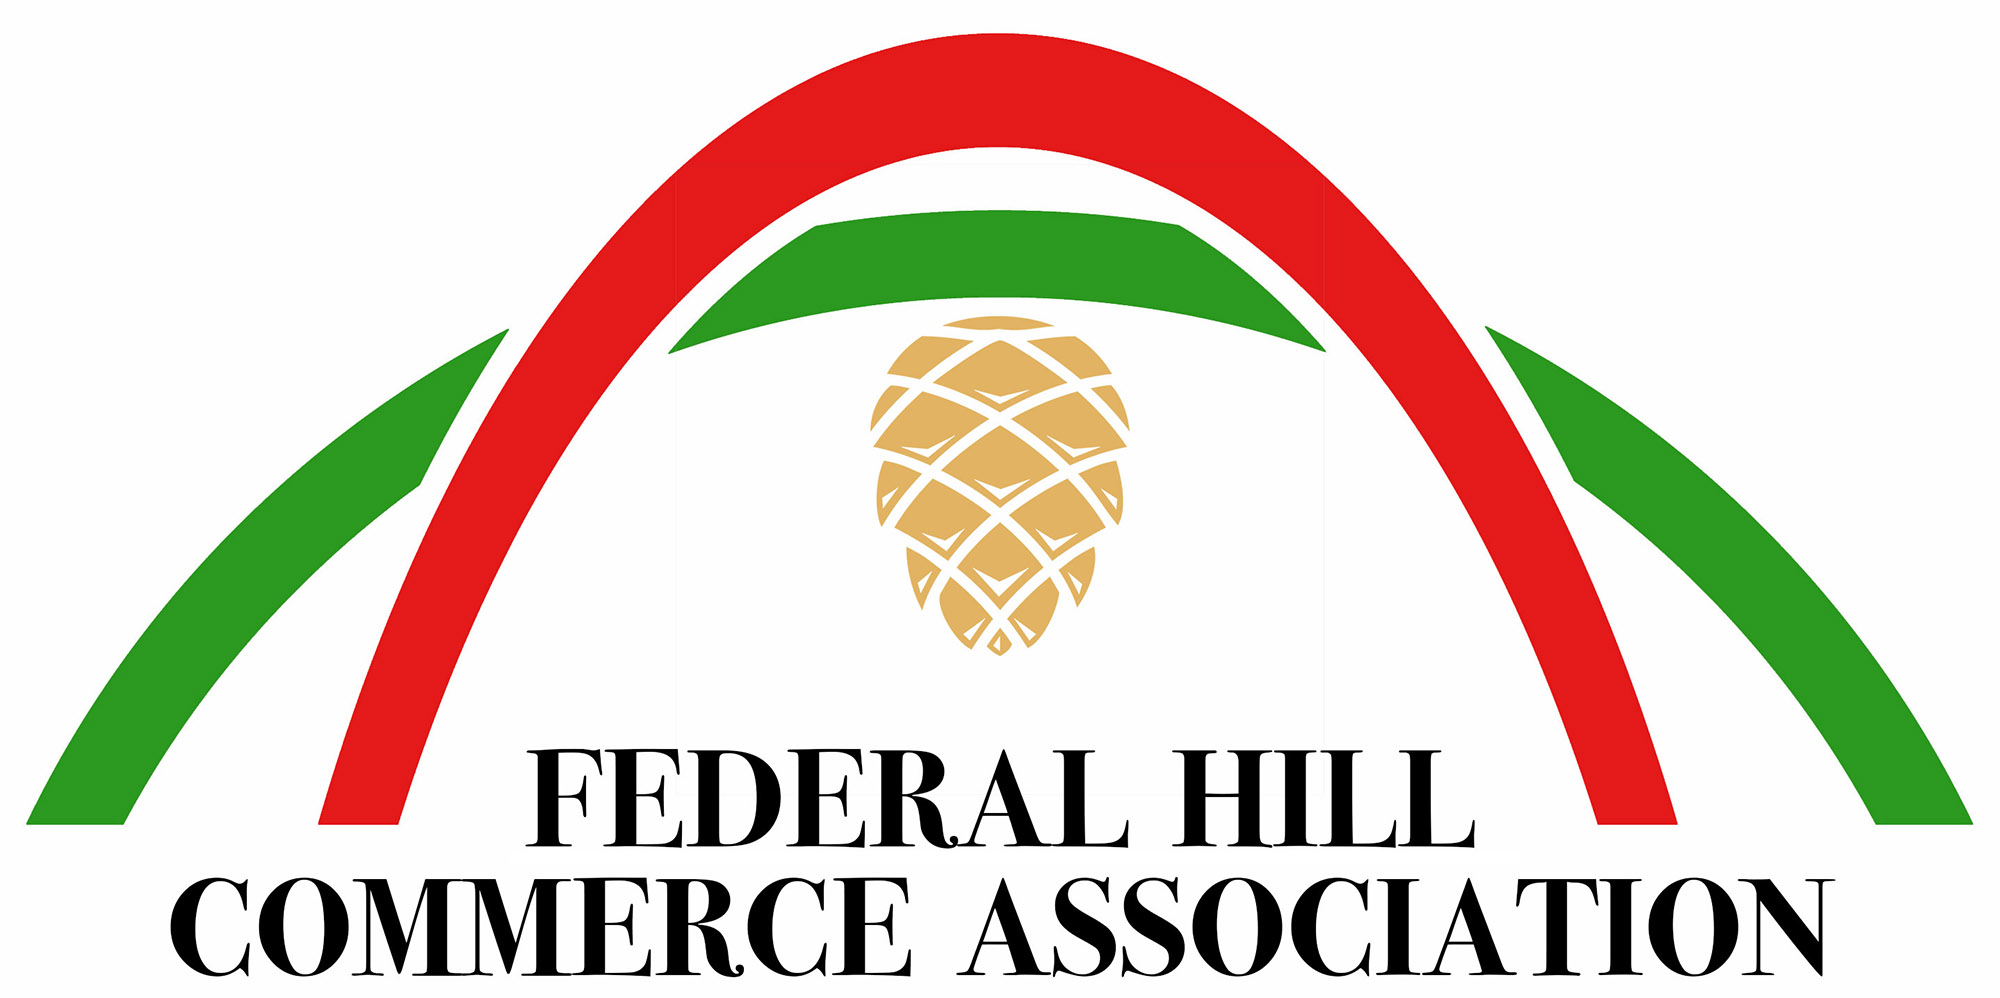 Federal Hill Commerce Association logo